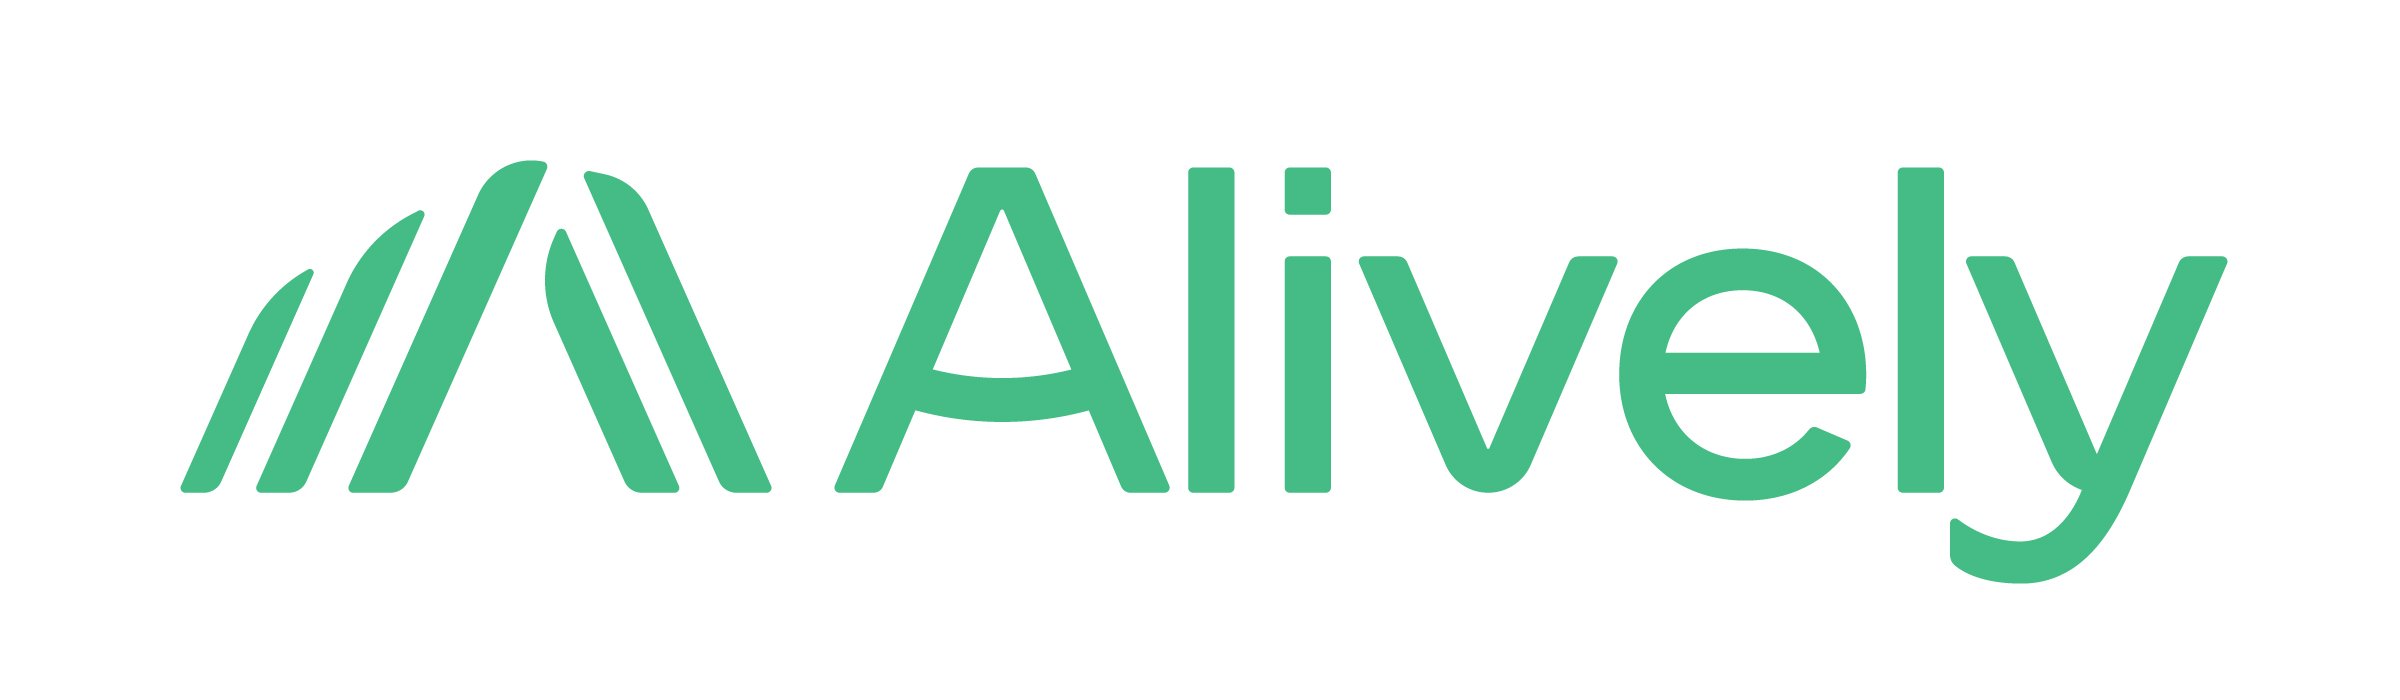 Alively logo inline green